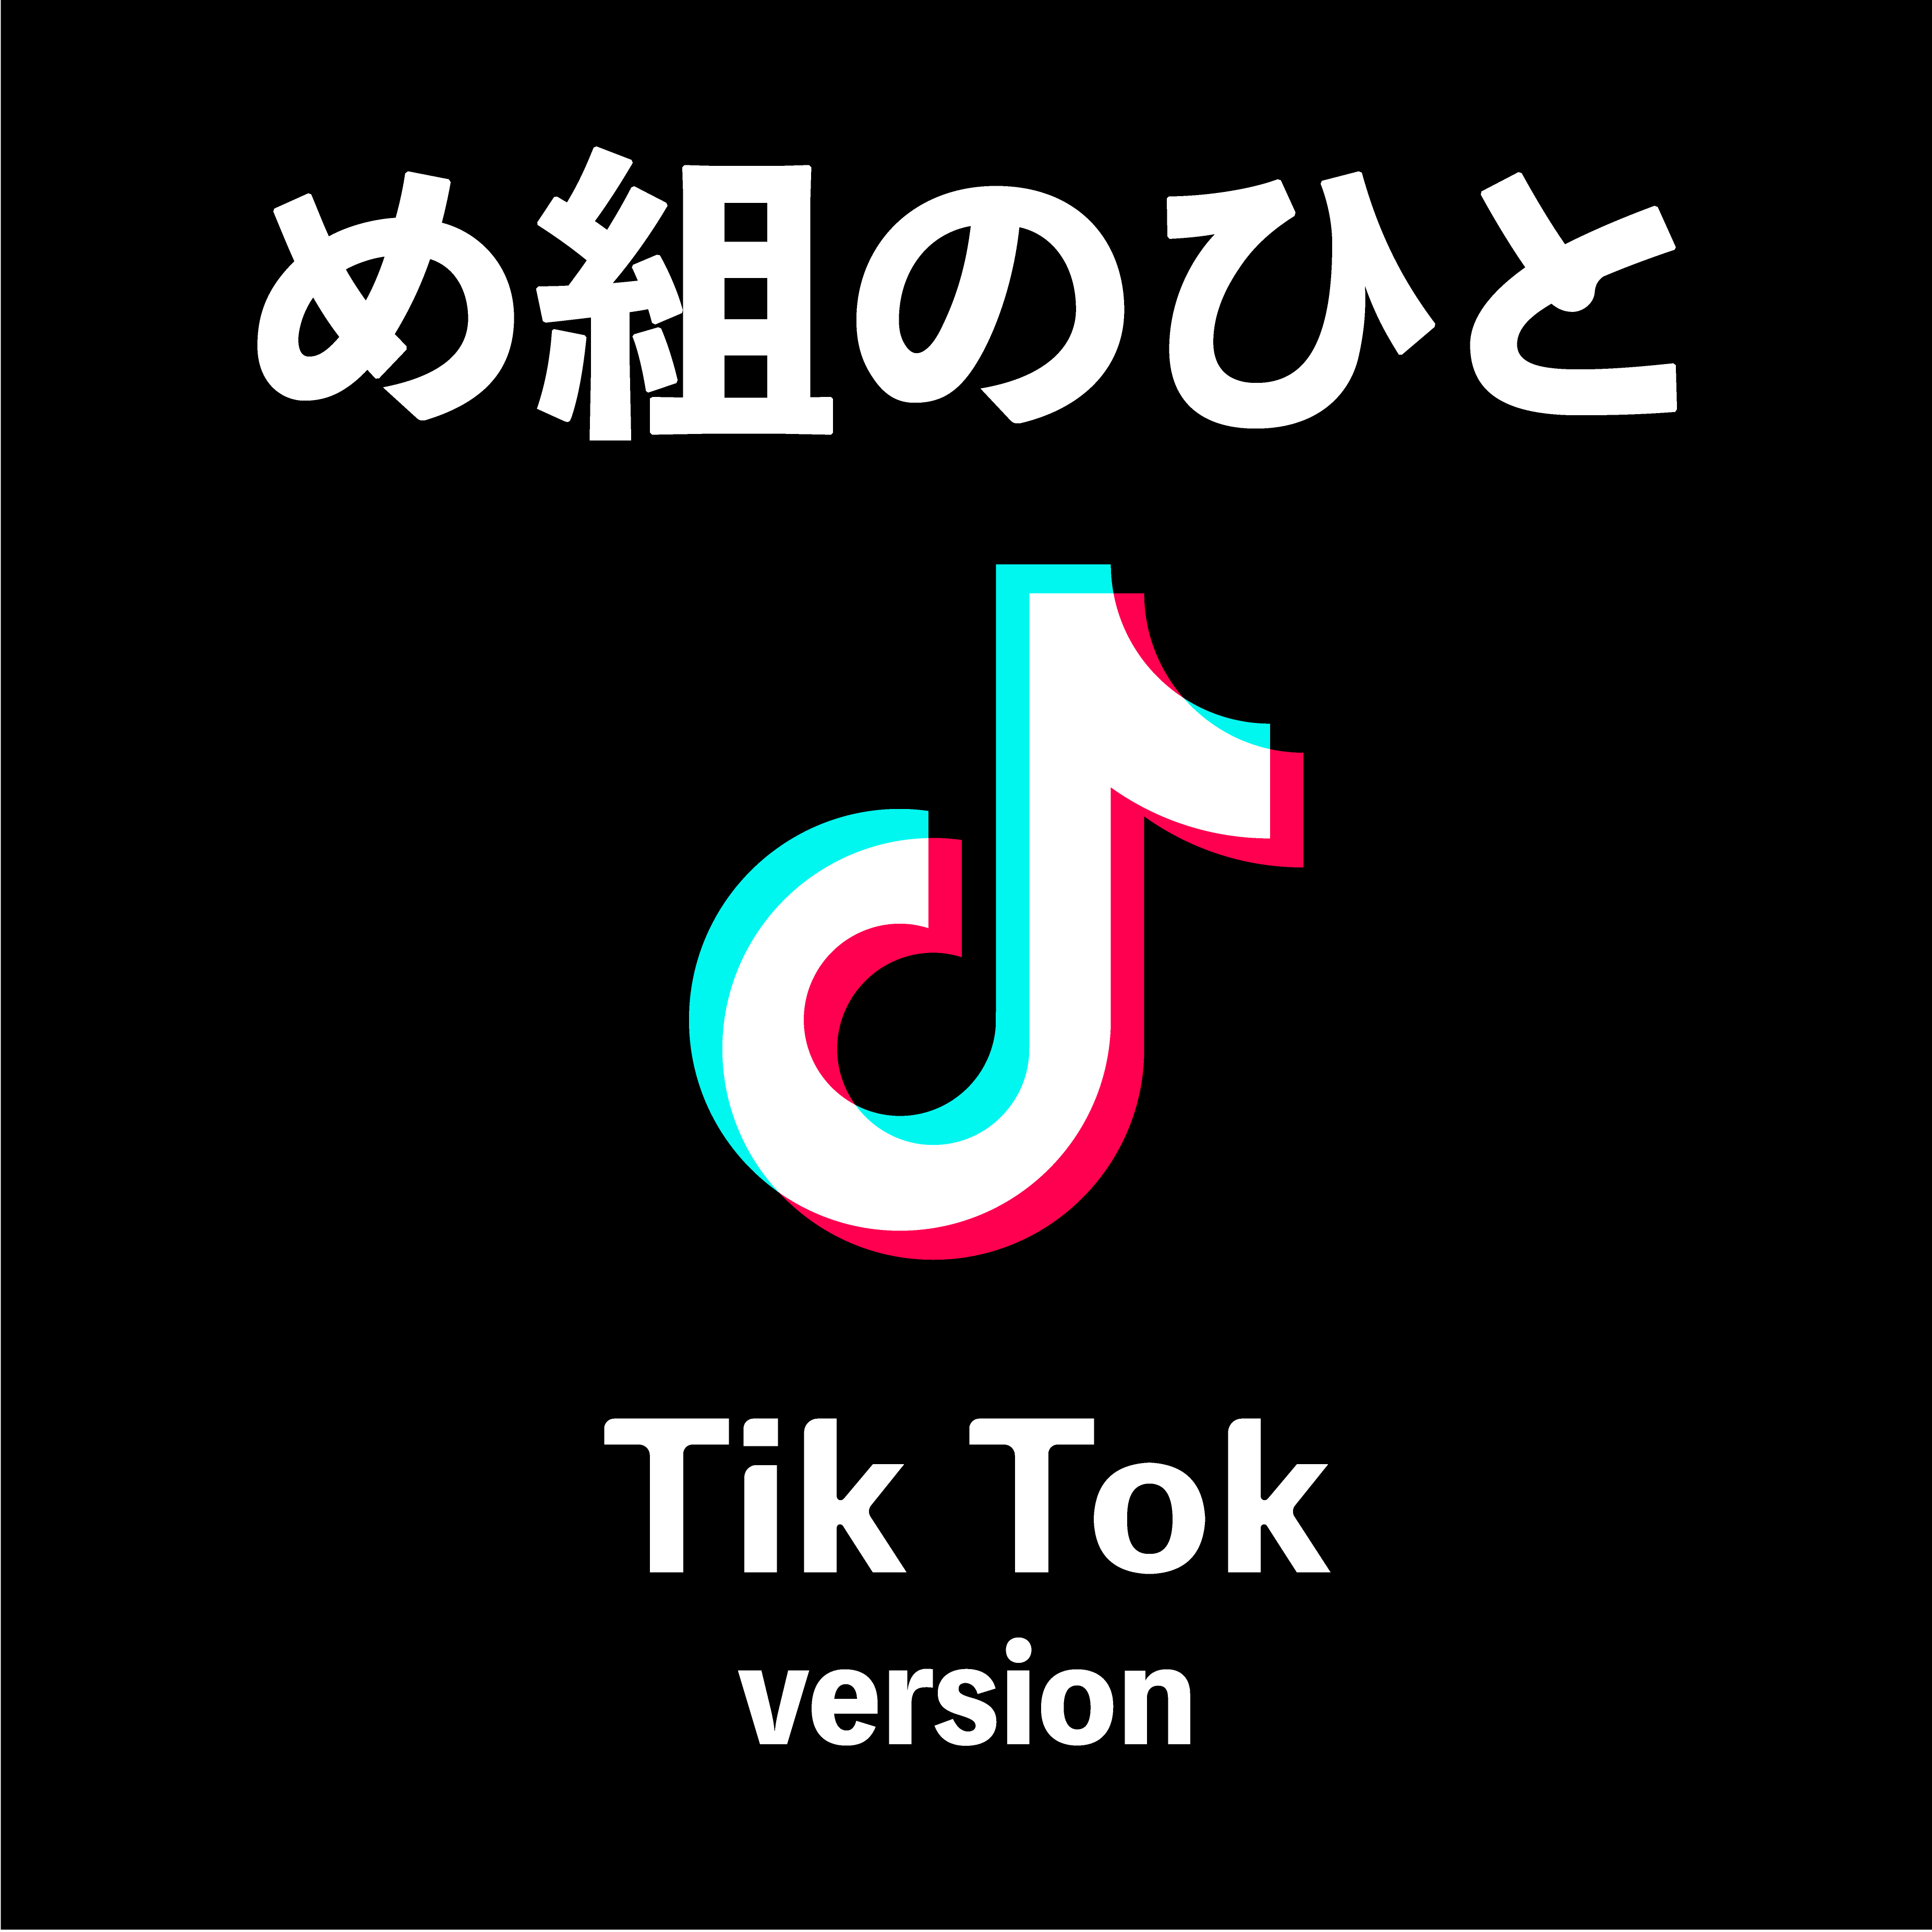 Tiktokで話題の倖田來未 め組のひと 高速アレンジされたtik Tokバージョンをリリース Line Music限定で配信決定 Line株式会社のプレスリリース